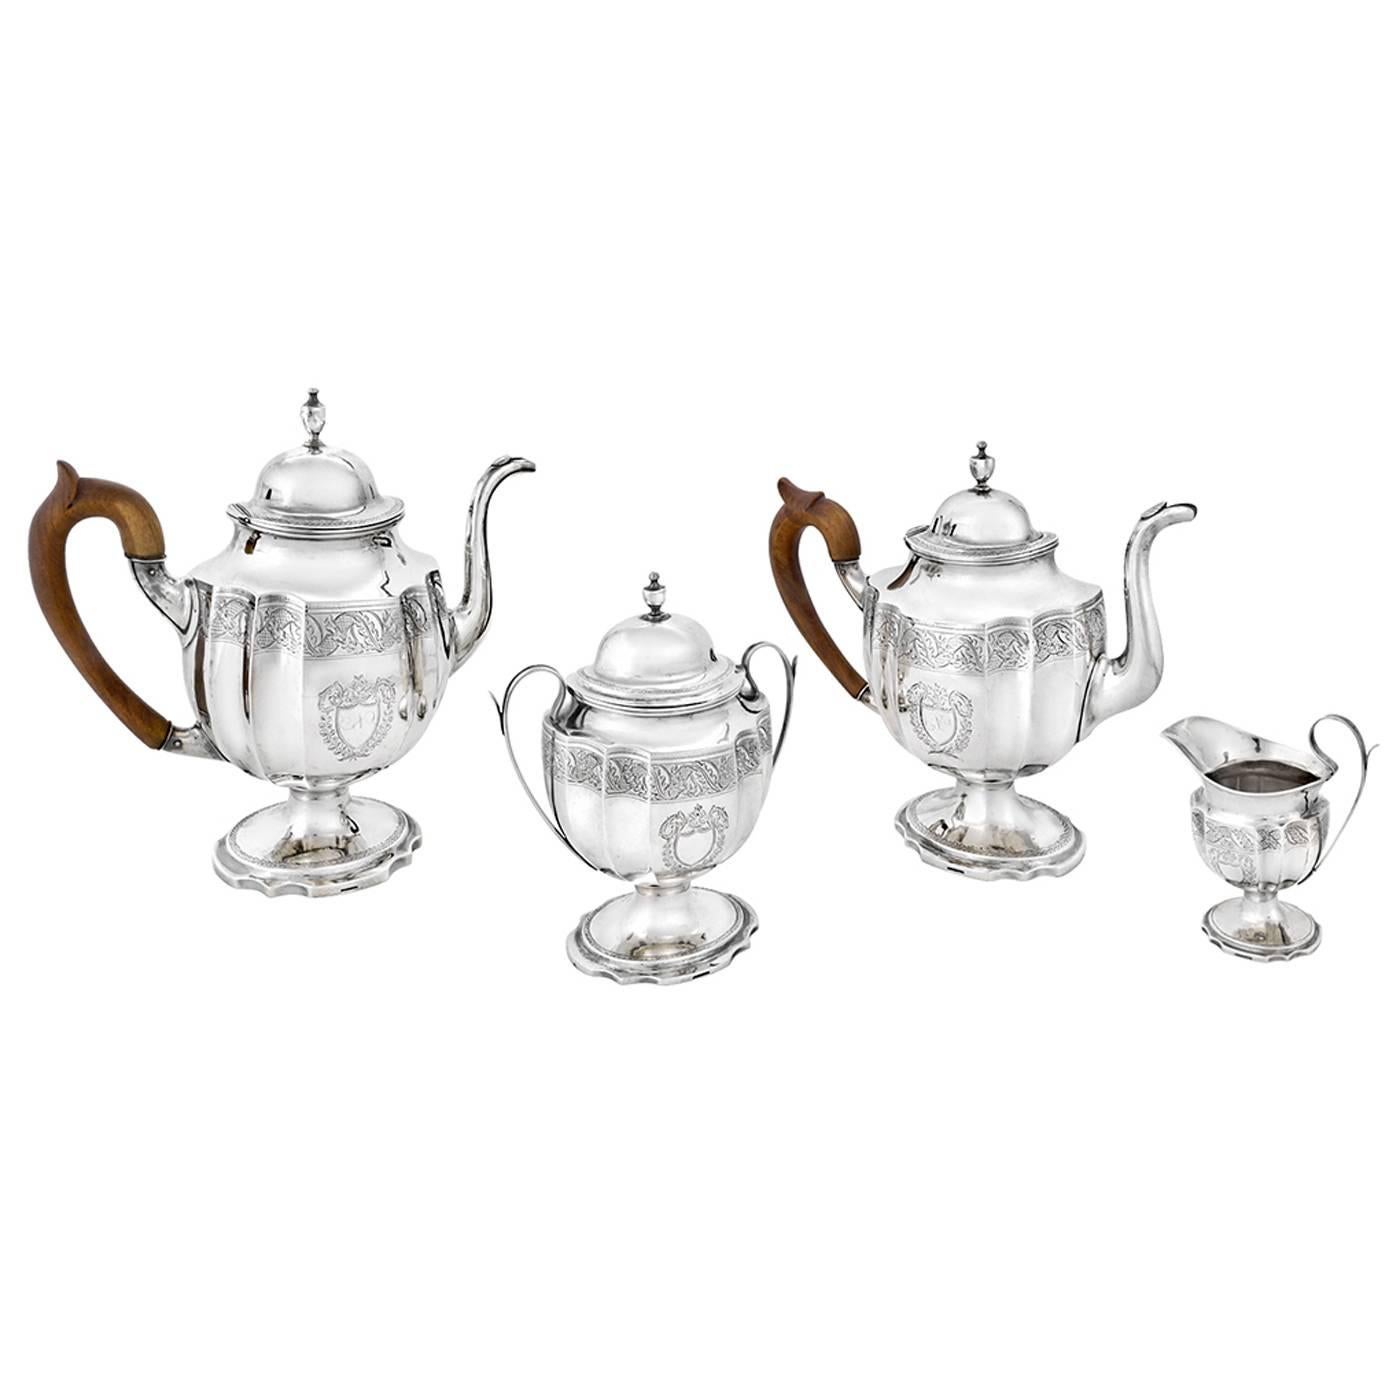 Early-American 4-Piece Silver Tea & Coffee Service